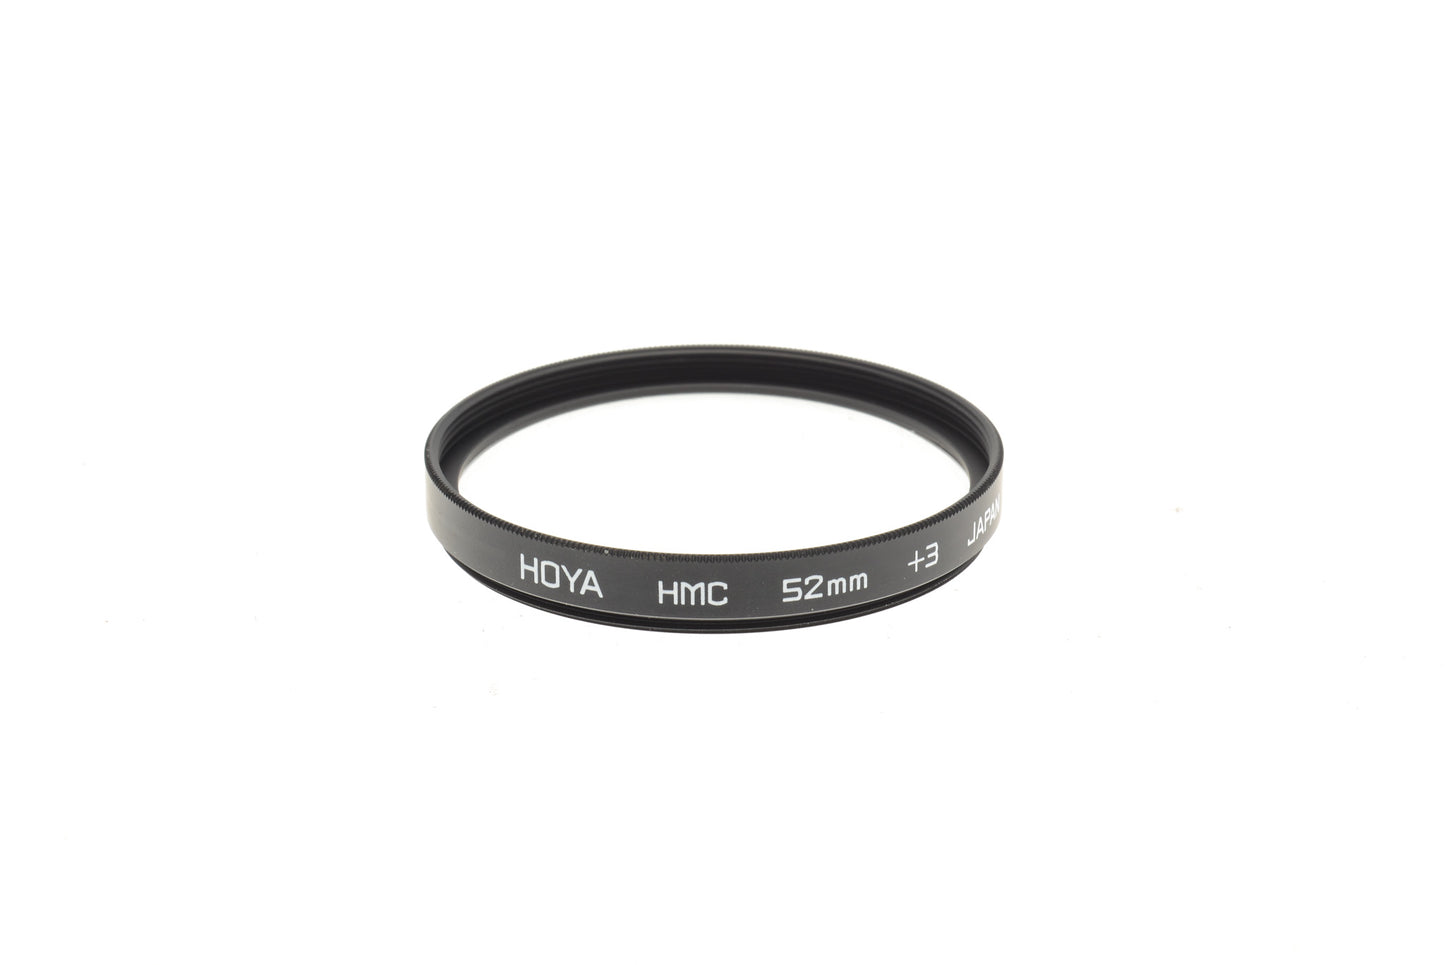 Hoya 52mm Close Up Filter +3 - Accessory